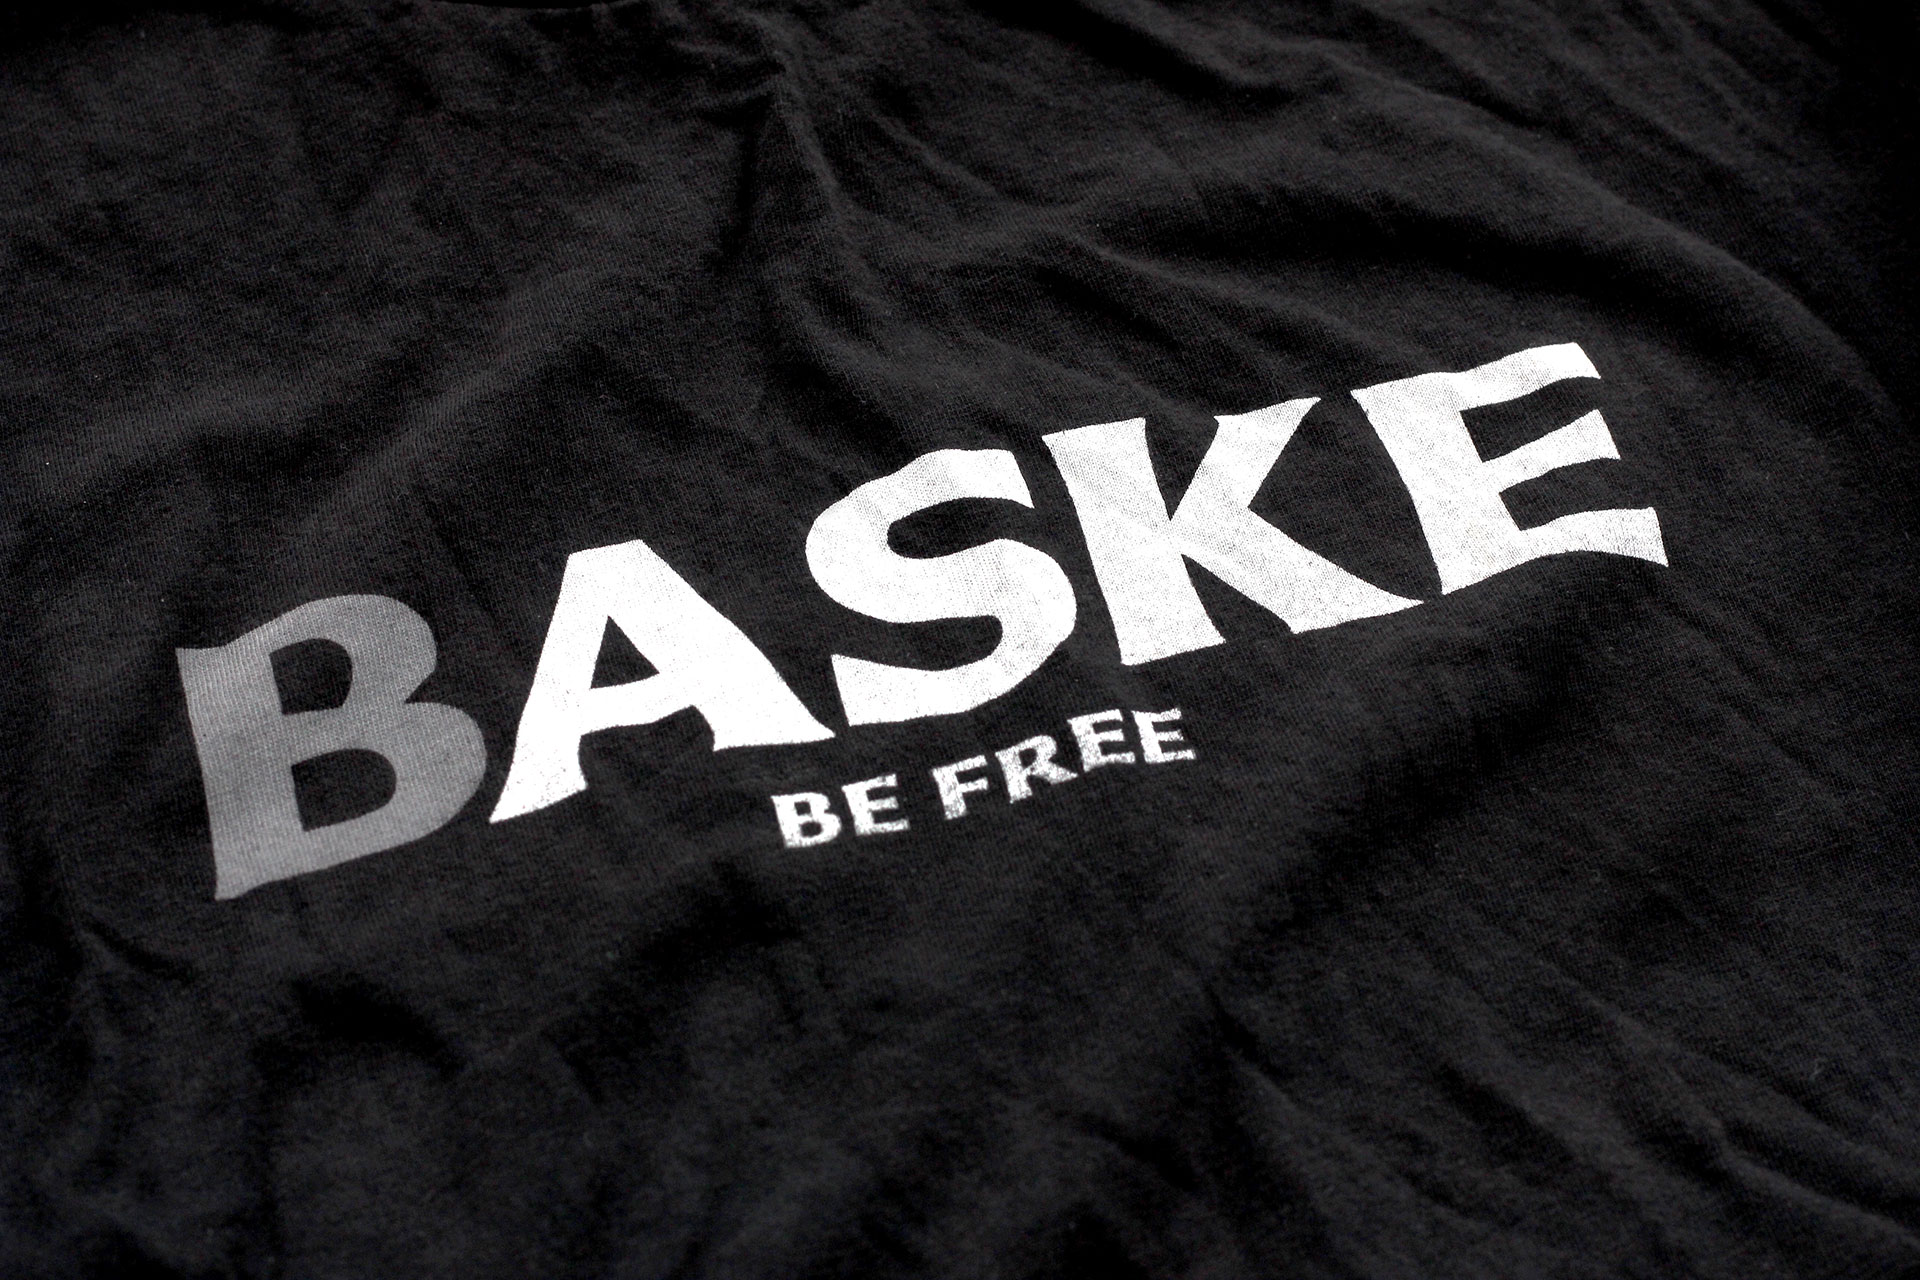 Baske, not Basque. Be free…